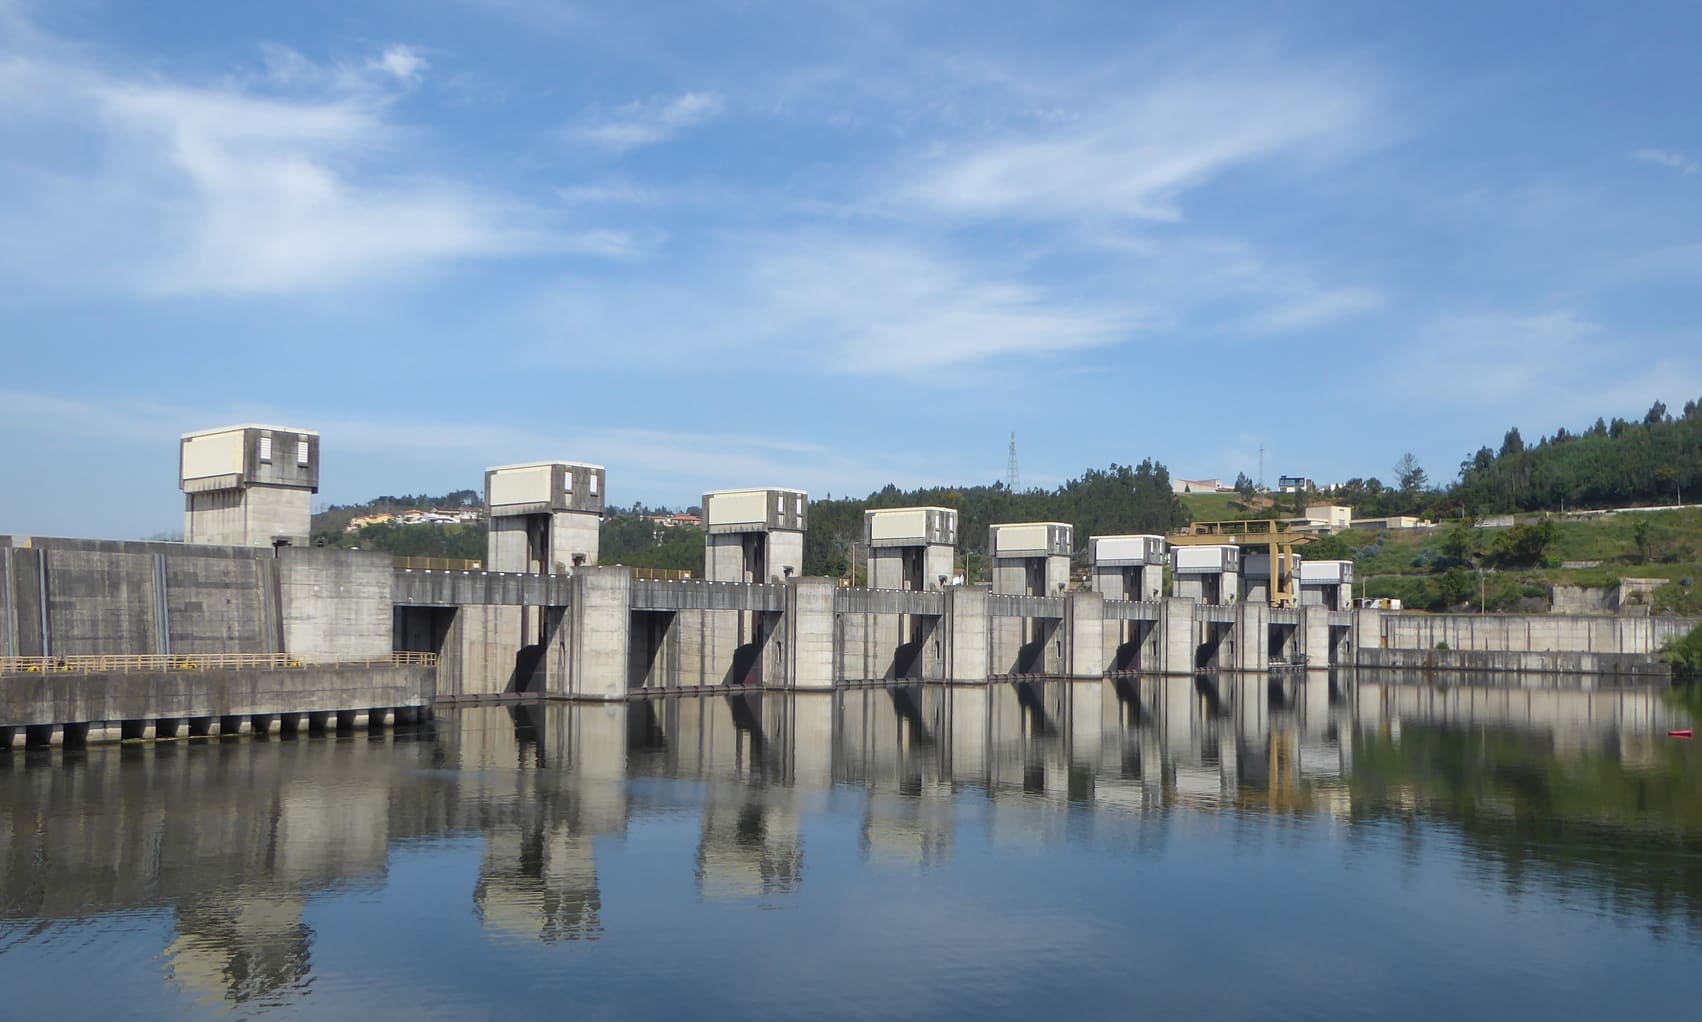 Barragem de Crestuma-Lever